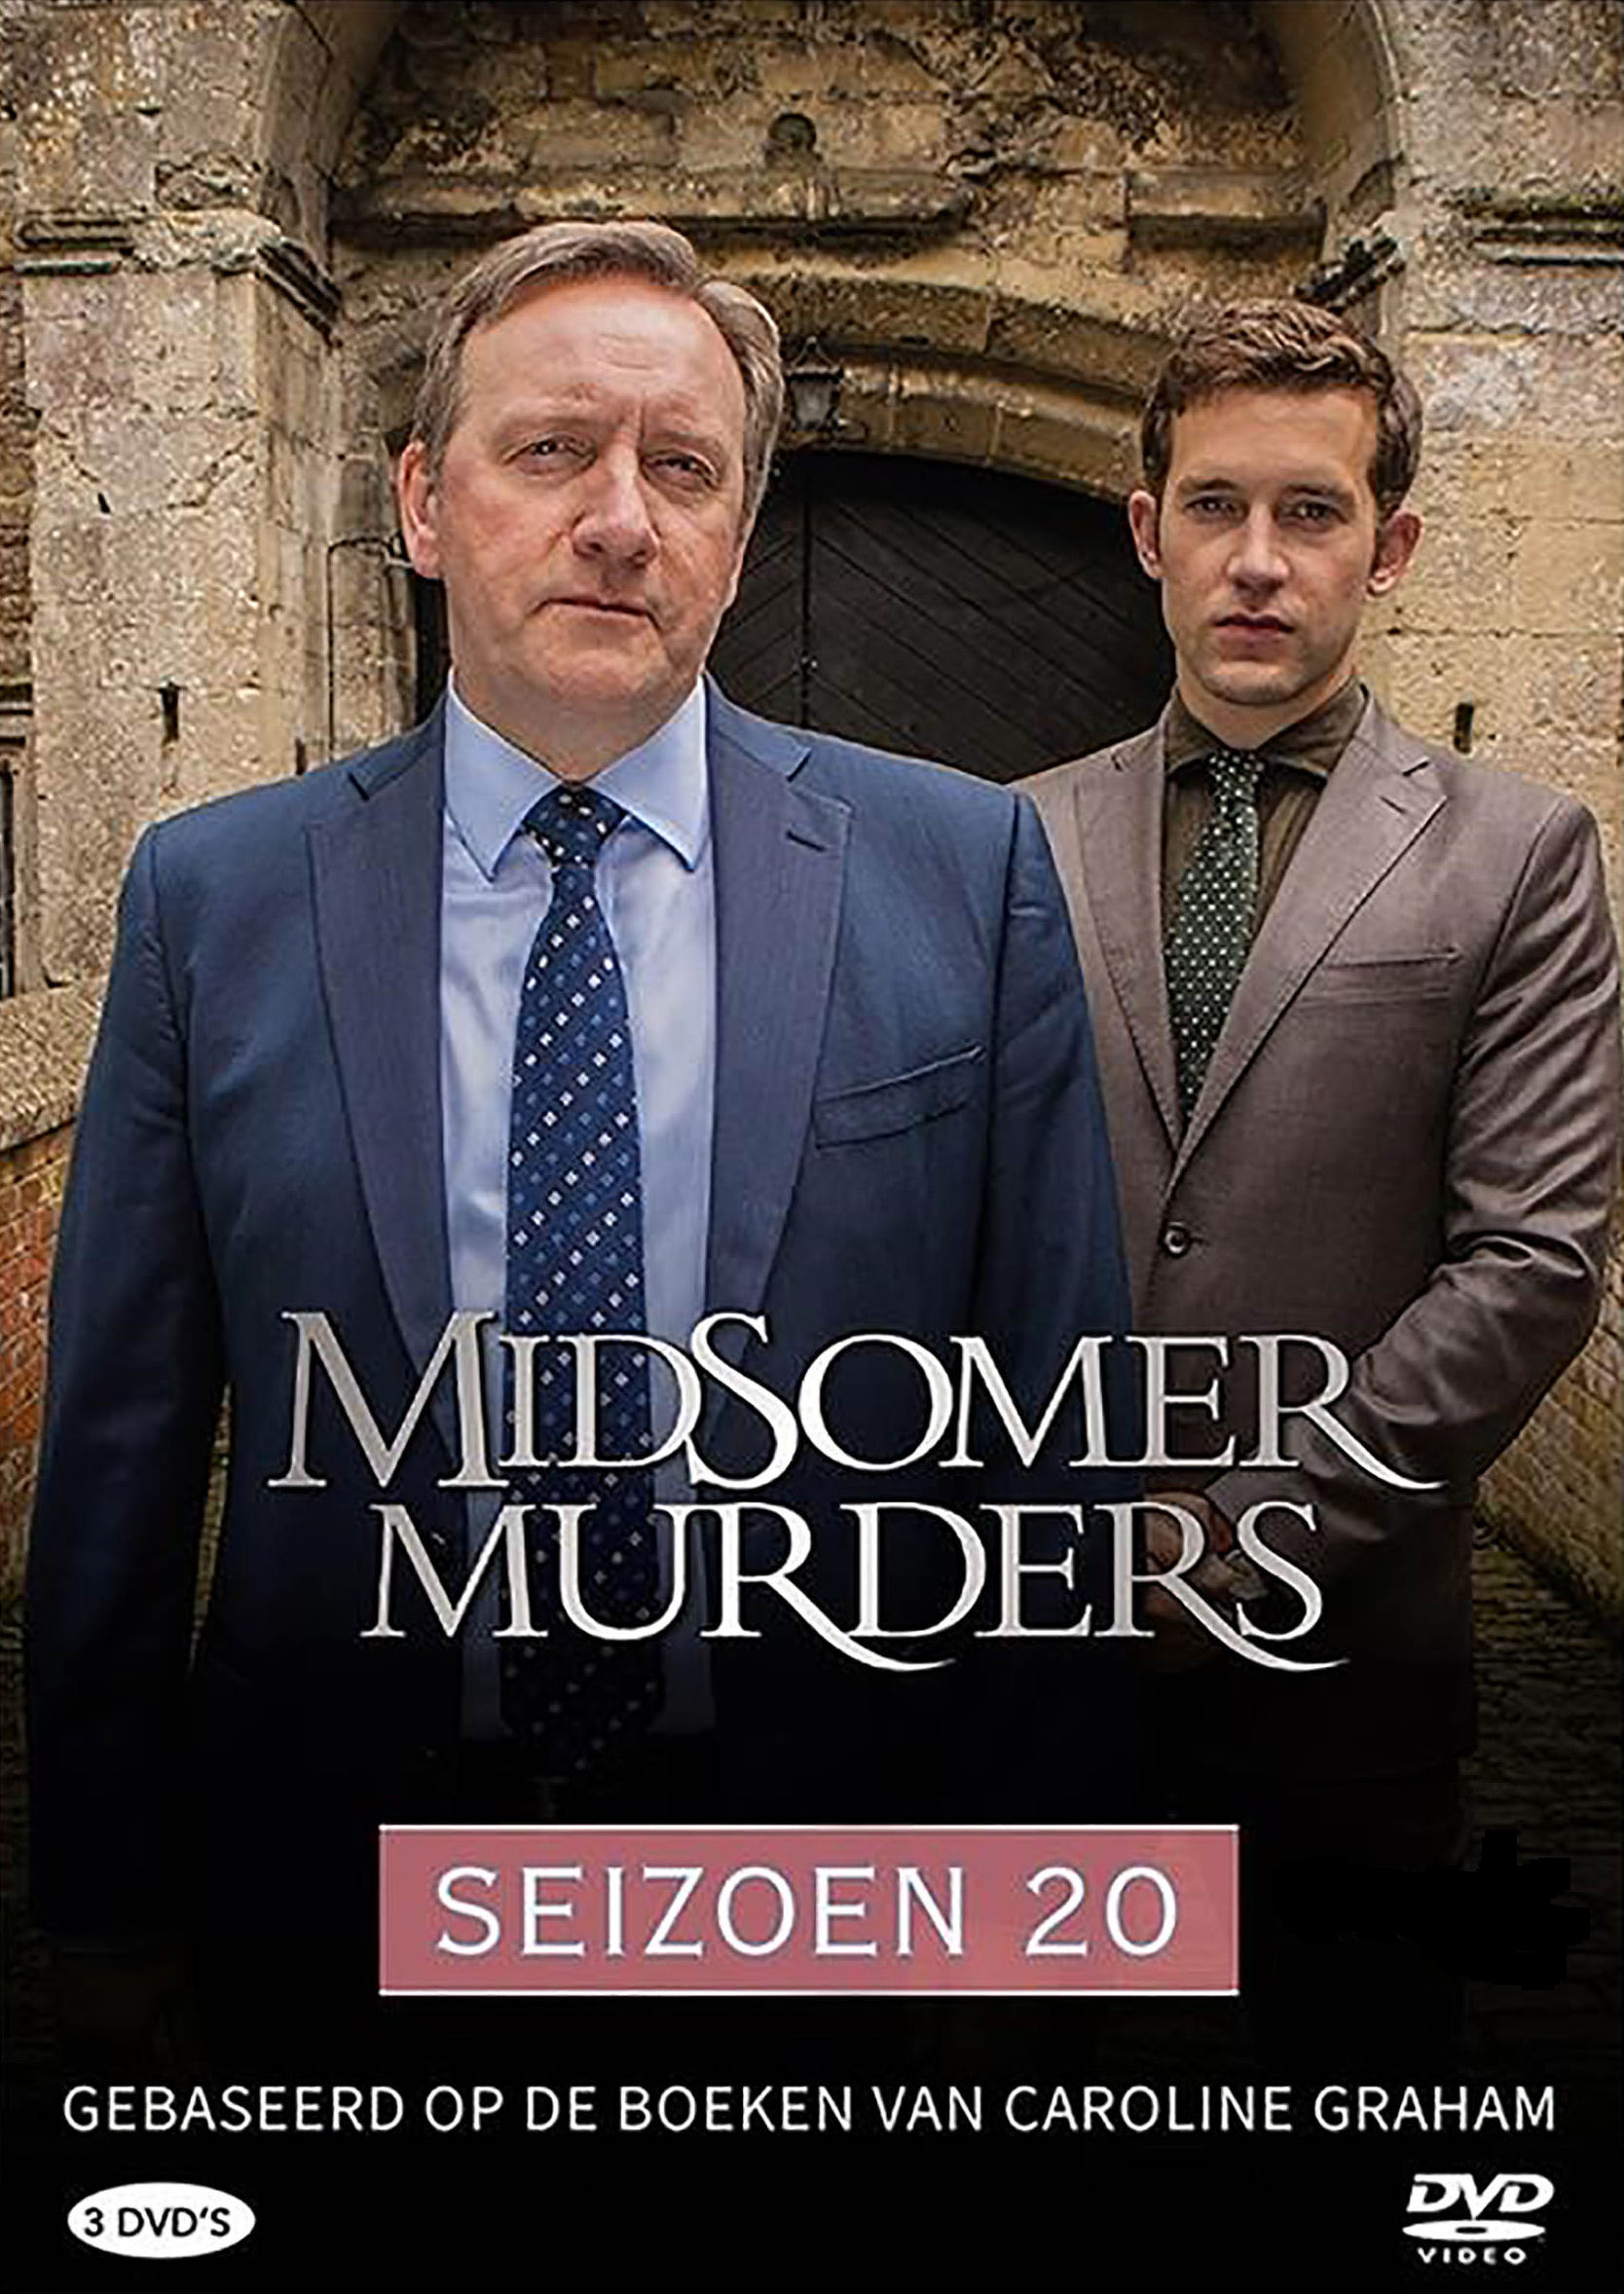 Midsomer Murders Seizoen 20 - DvD 2 (Afl 3 - 4)